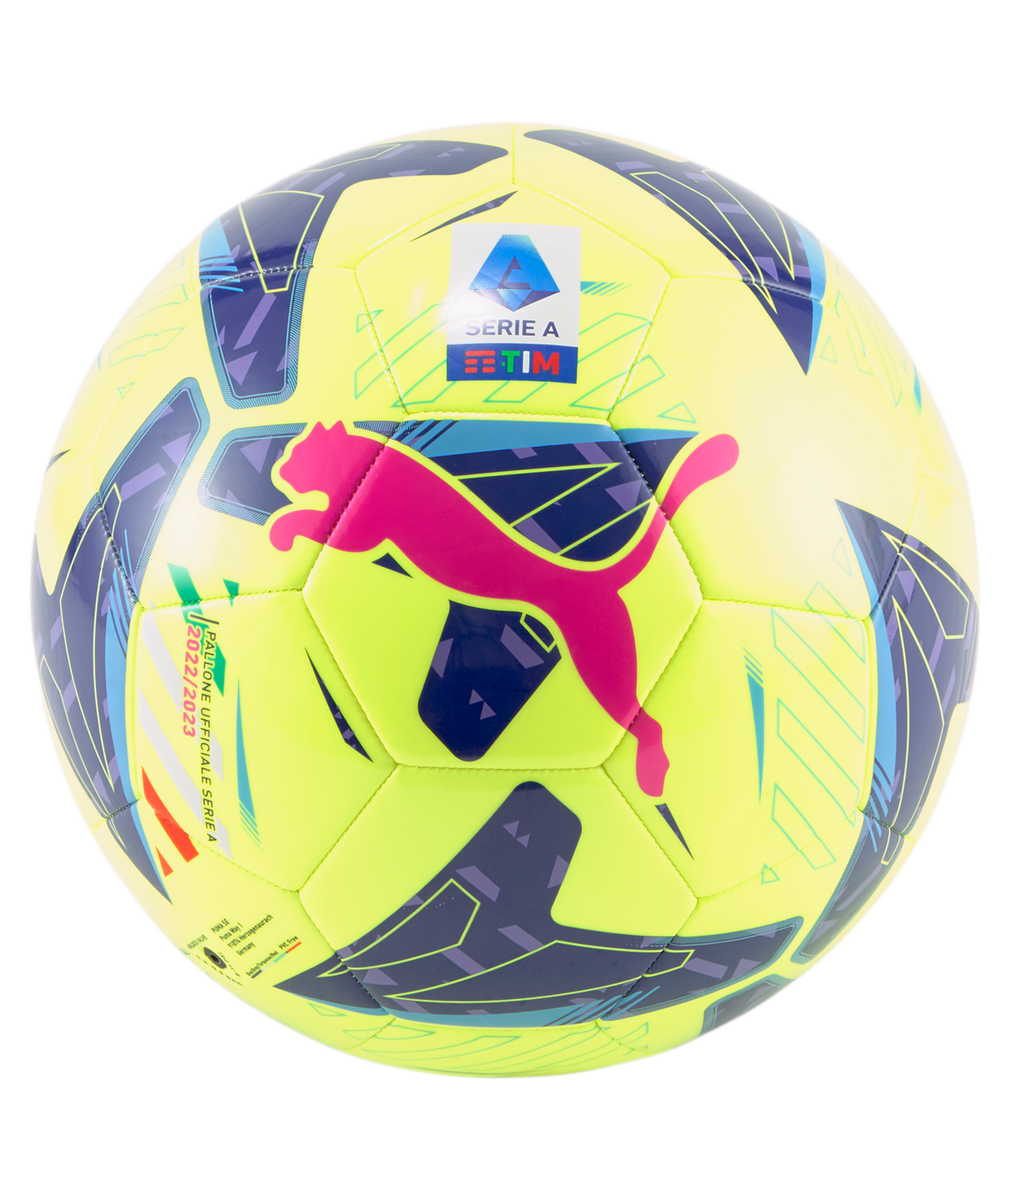 Balón La Liga 1 Accelerate Mini Football